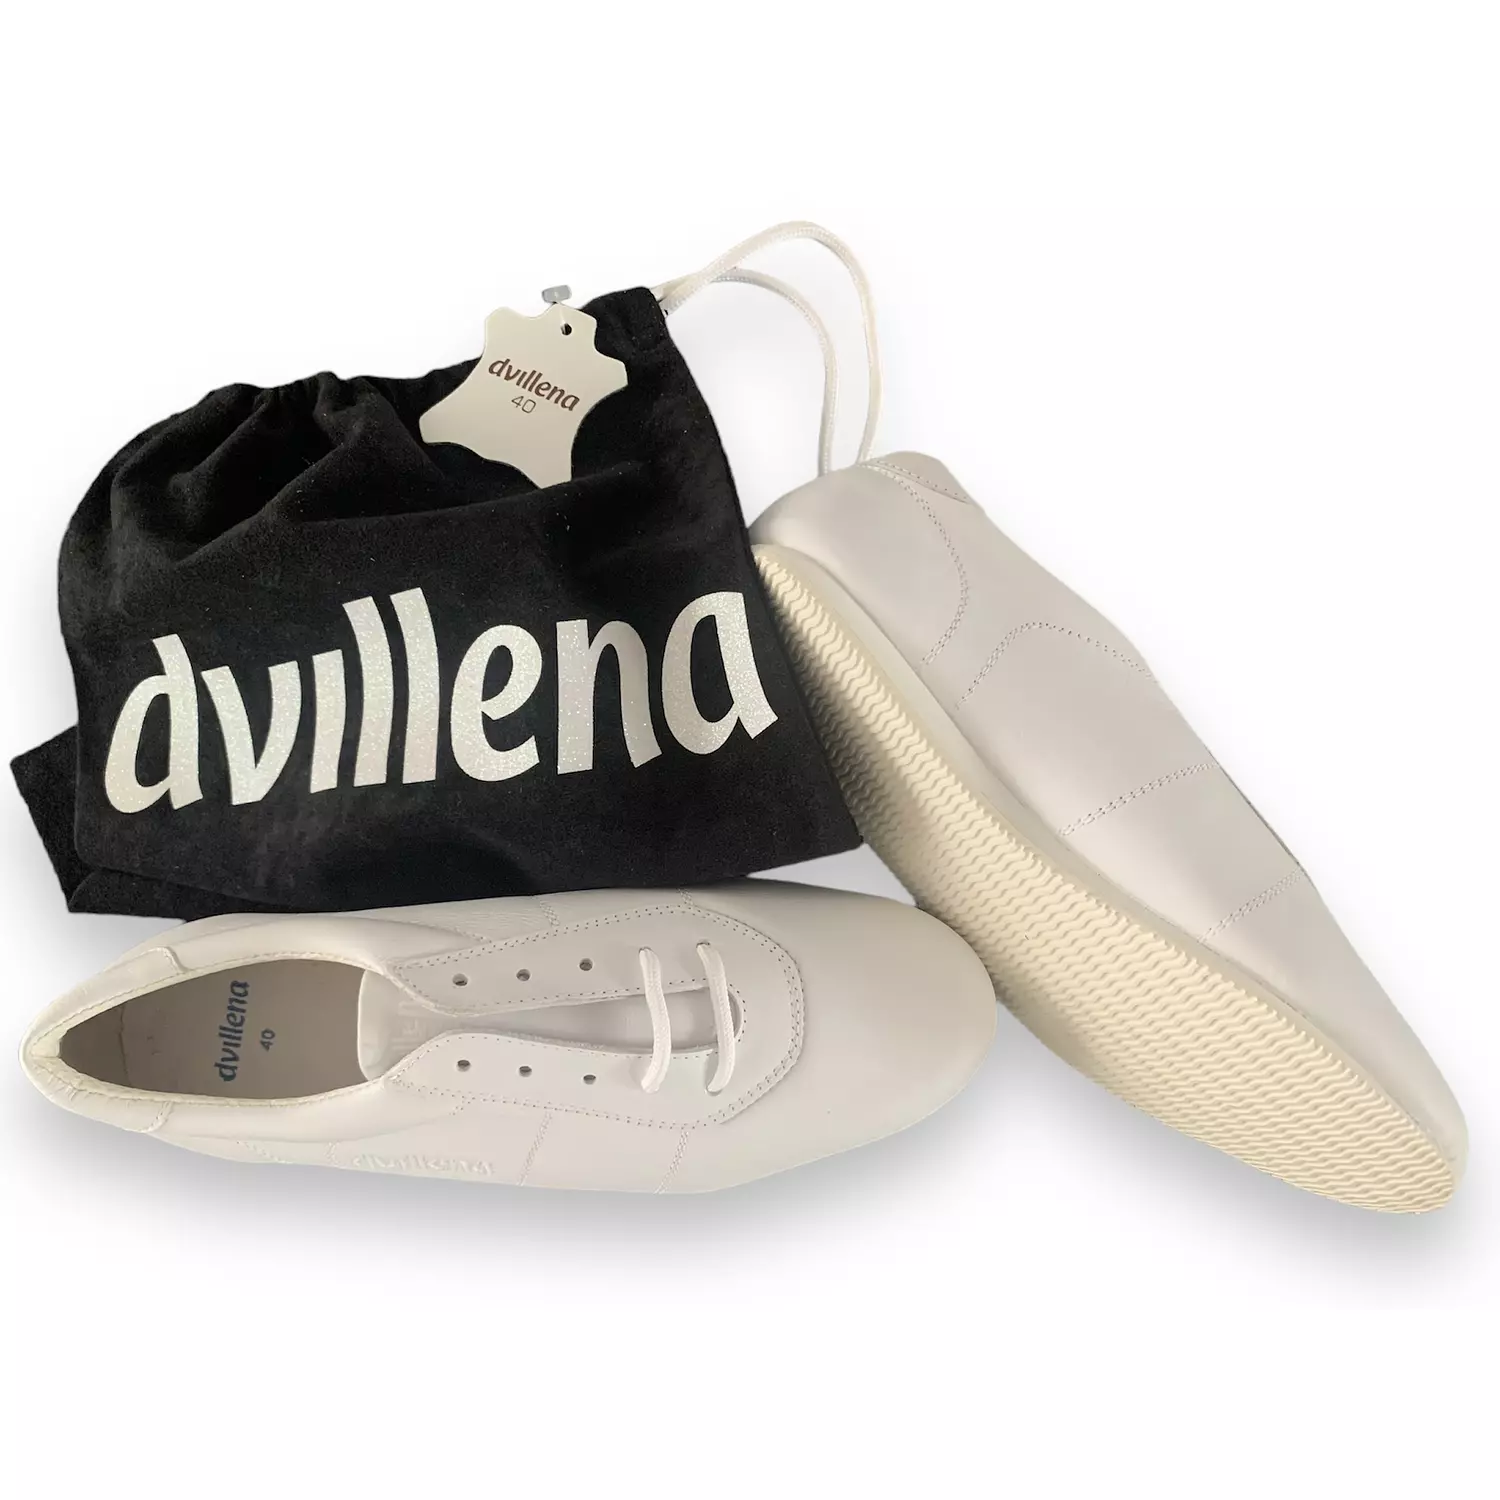 Dvillena-Aerobic Shoes-2nd-img